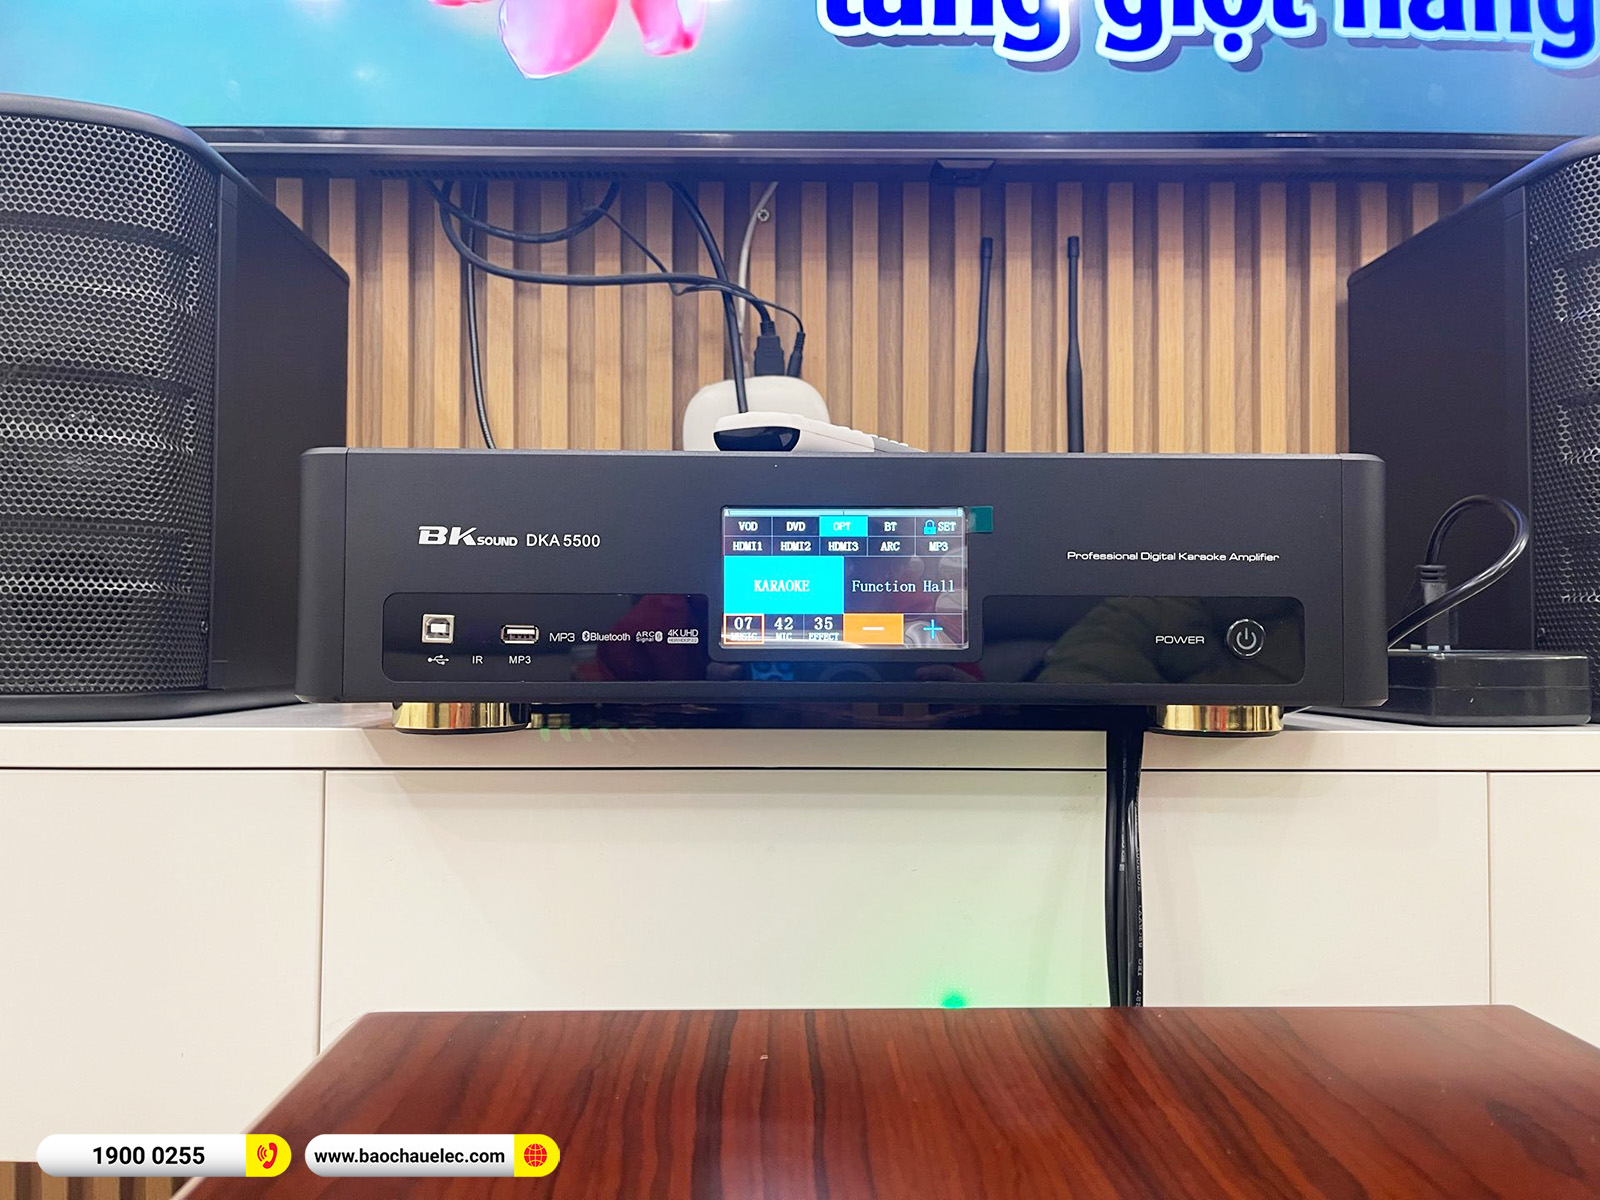 Lắp đặt dàn karaoke BIK hơn 18tr cho chị Lan Anh tại Hà Nội (BIK BJ-S668, BKSound DKA 5500, SW512) 